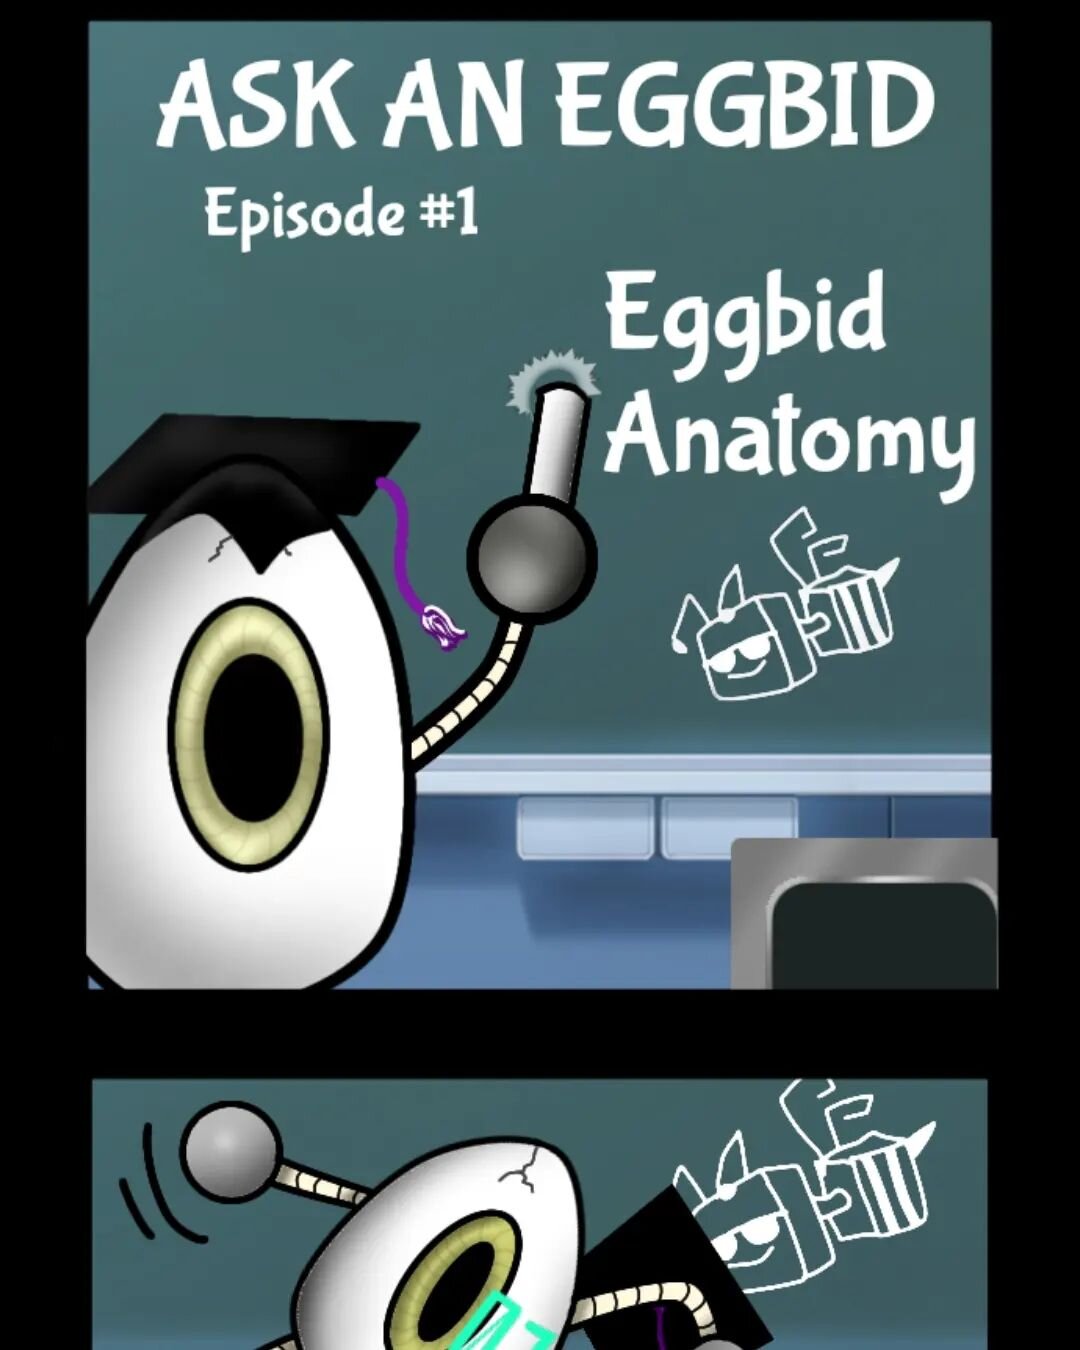 Published the first episode of Ask An Eggbid! @webtoonofficial 

Link in bio!

#comics #webcomics #scifi #comedy #illustration #digitalillustration  #cartoons #techspressionism #SKELLYBOTS #postapocalypse #blockybeez #webtoons